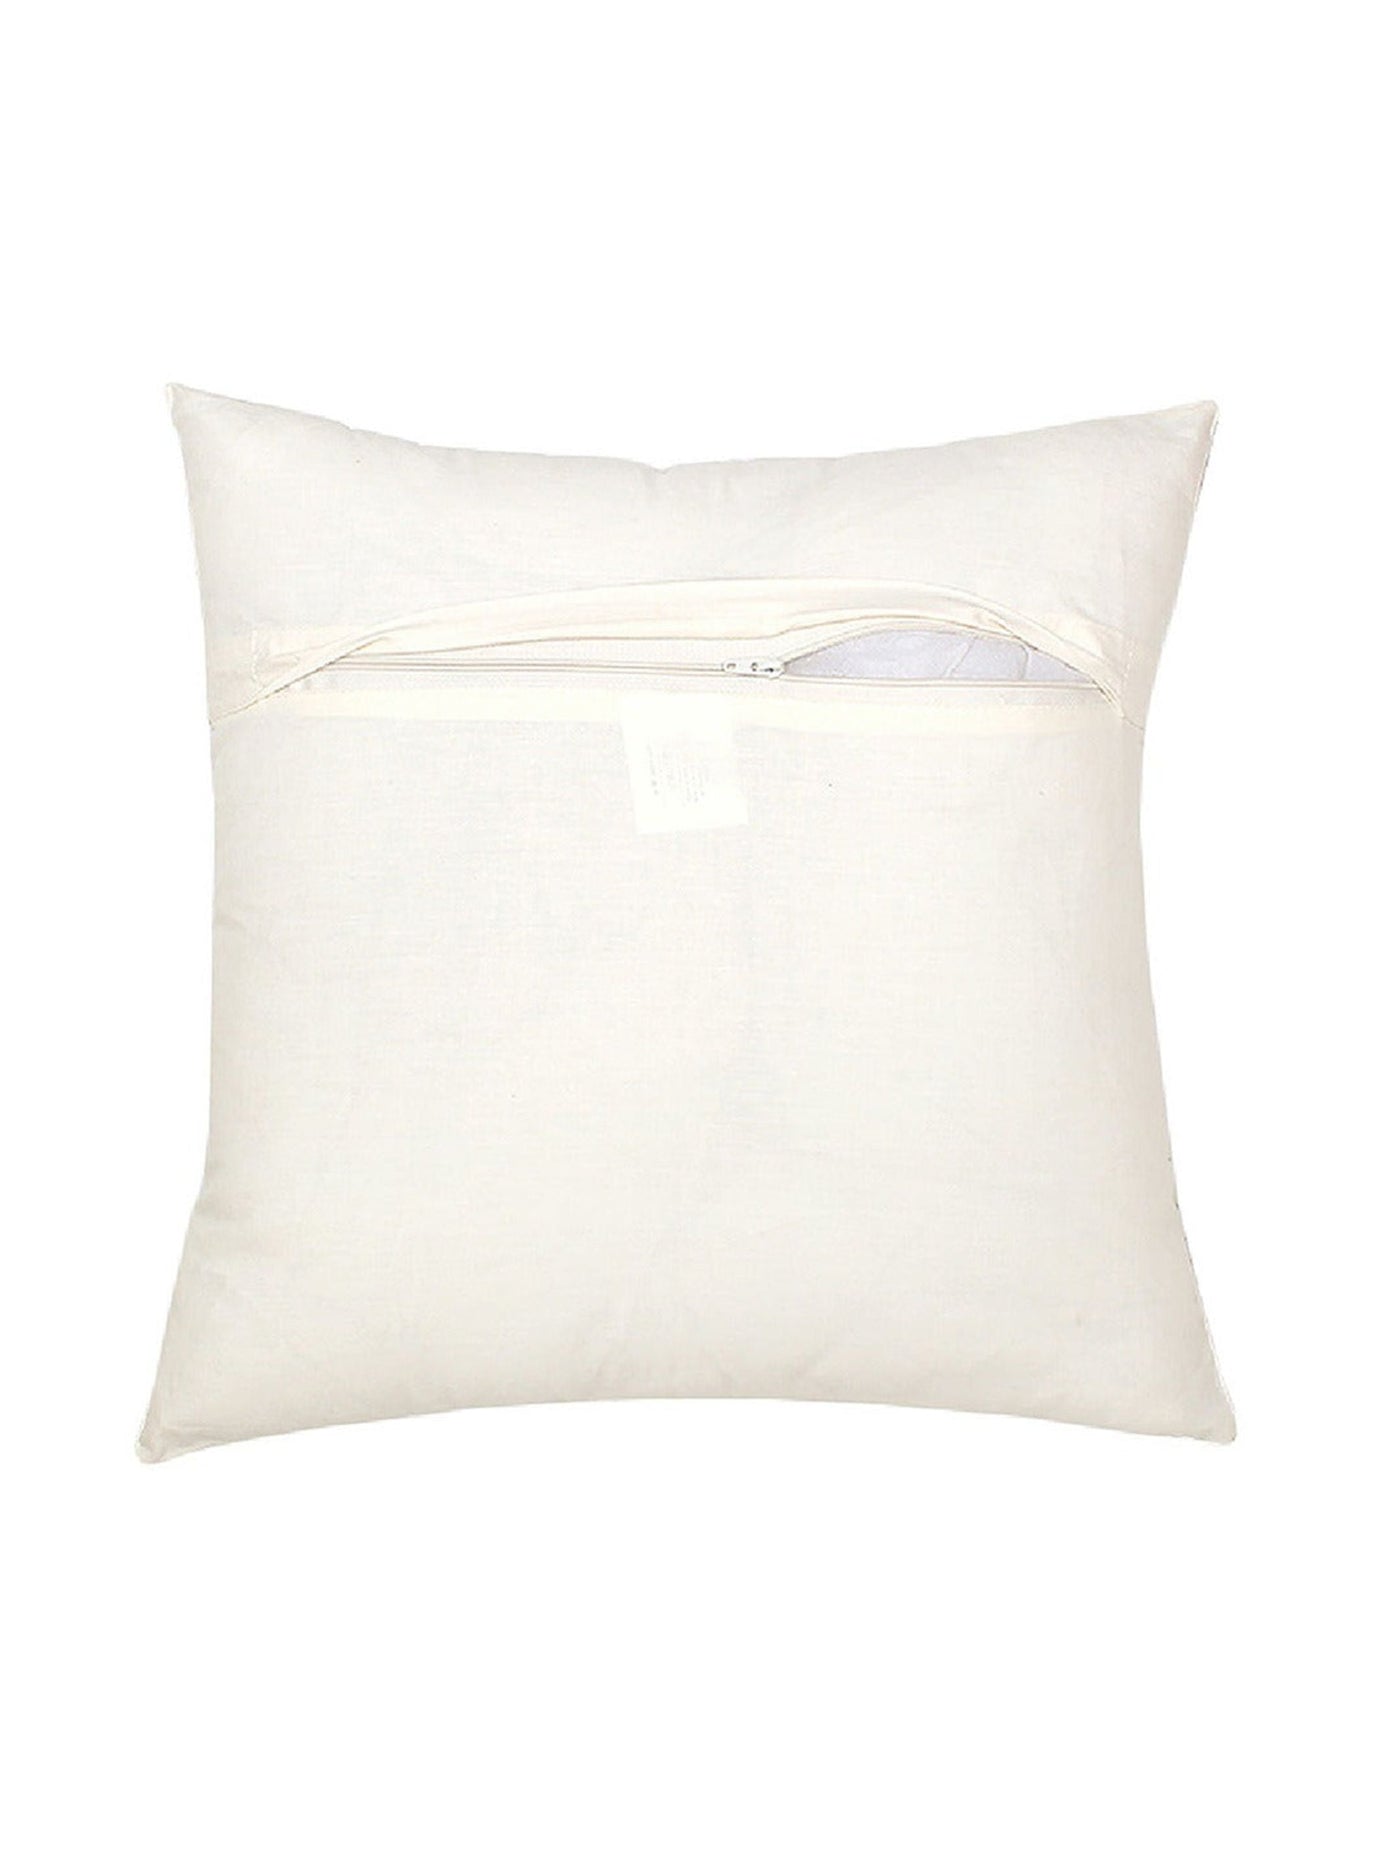 2 Cushion Covers - 2 s-8903773000784